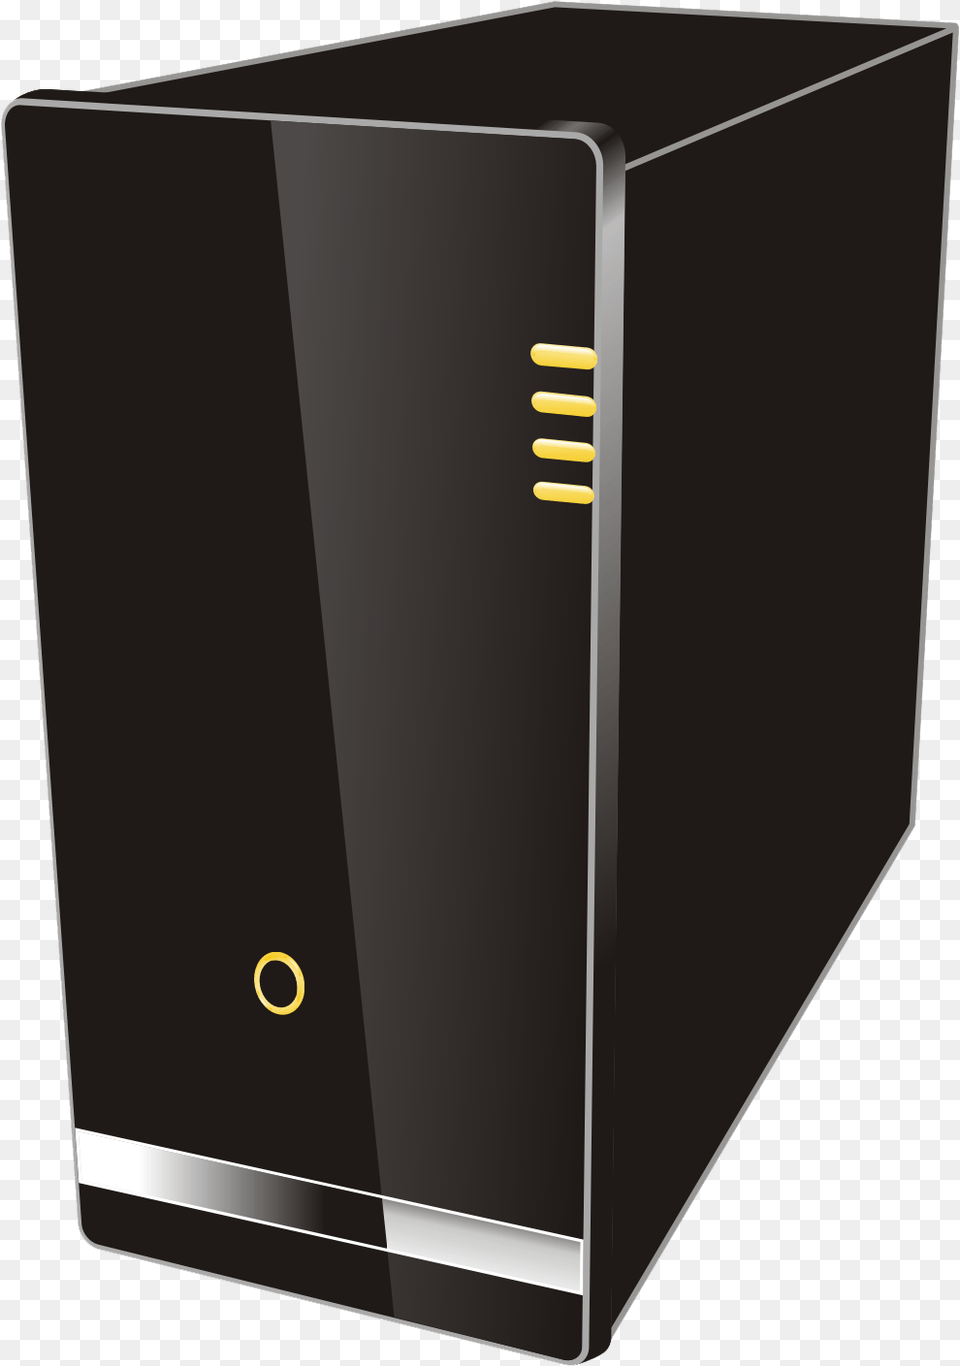 Server Computer Main Server, Computer Hardware, Electronics, Hardware Png Image